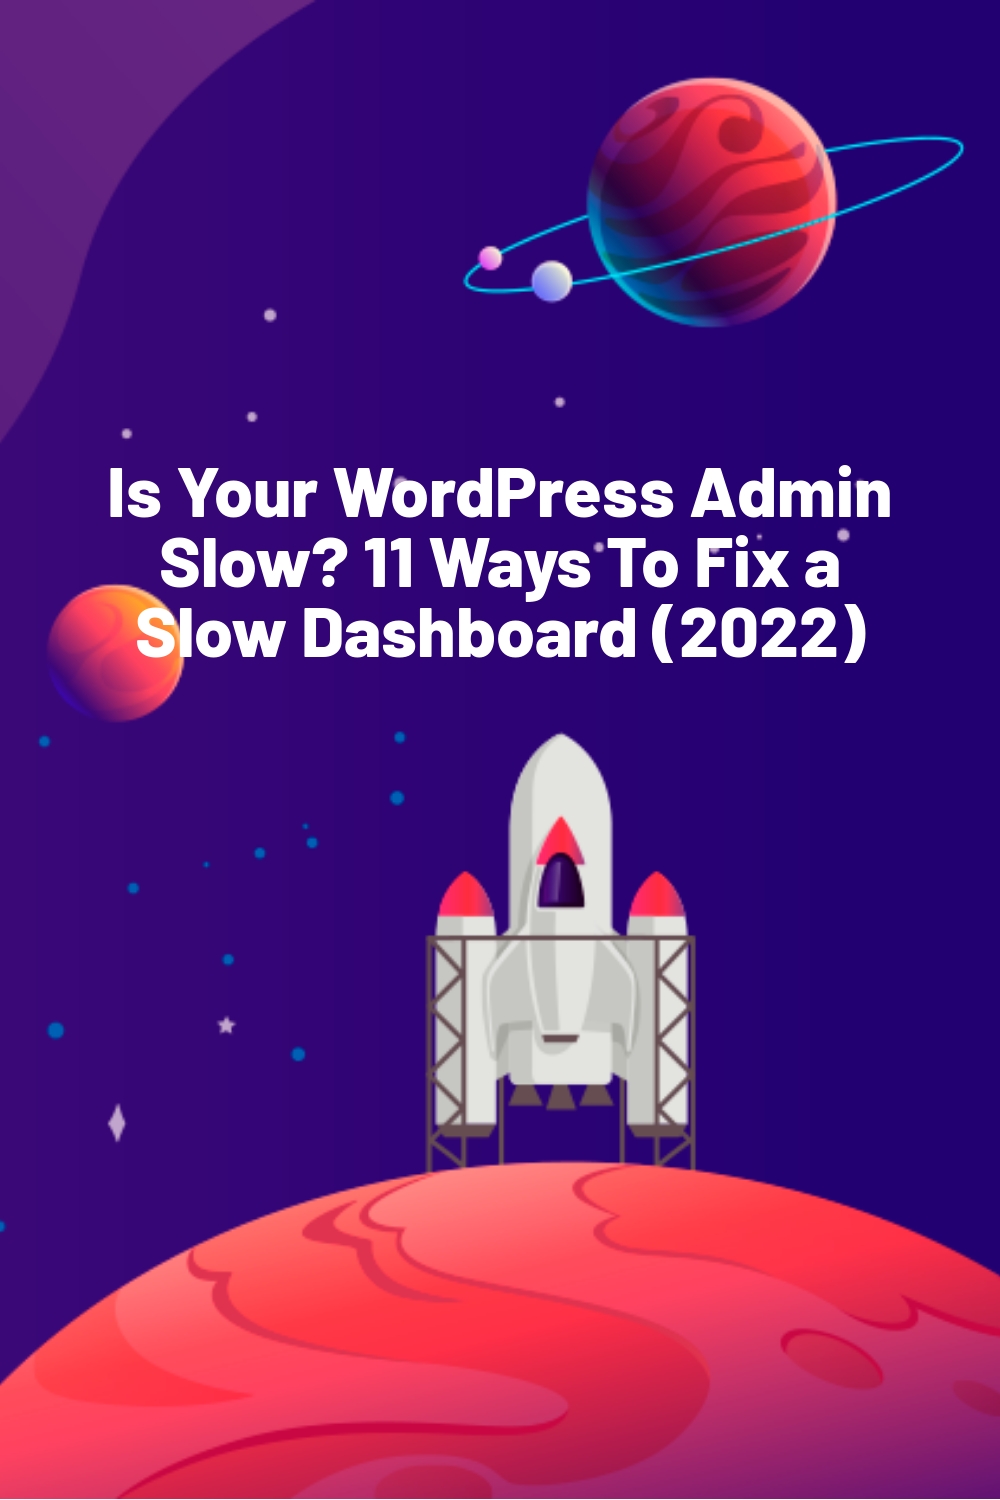 Is Your WordPress Admin Slow? 11 Ways To Fix a Slow Dashboard (2022)